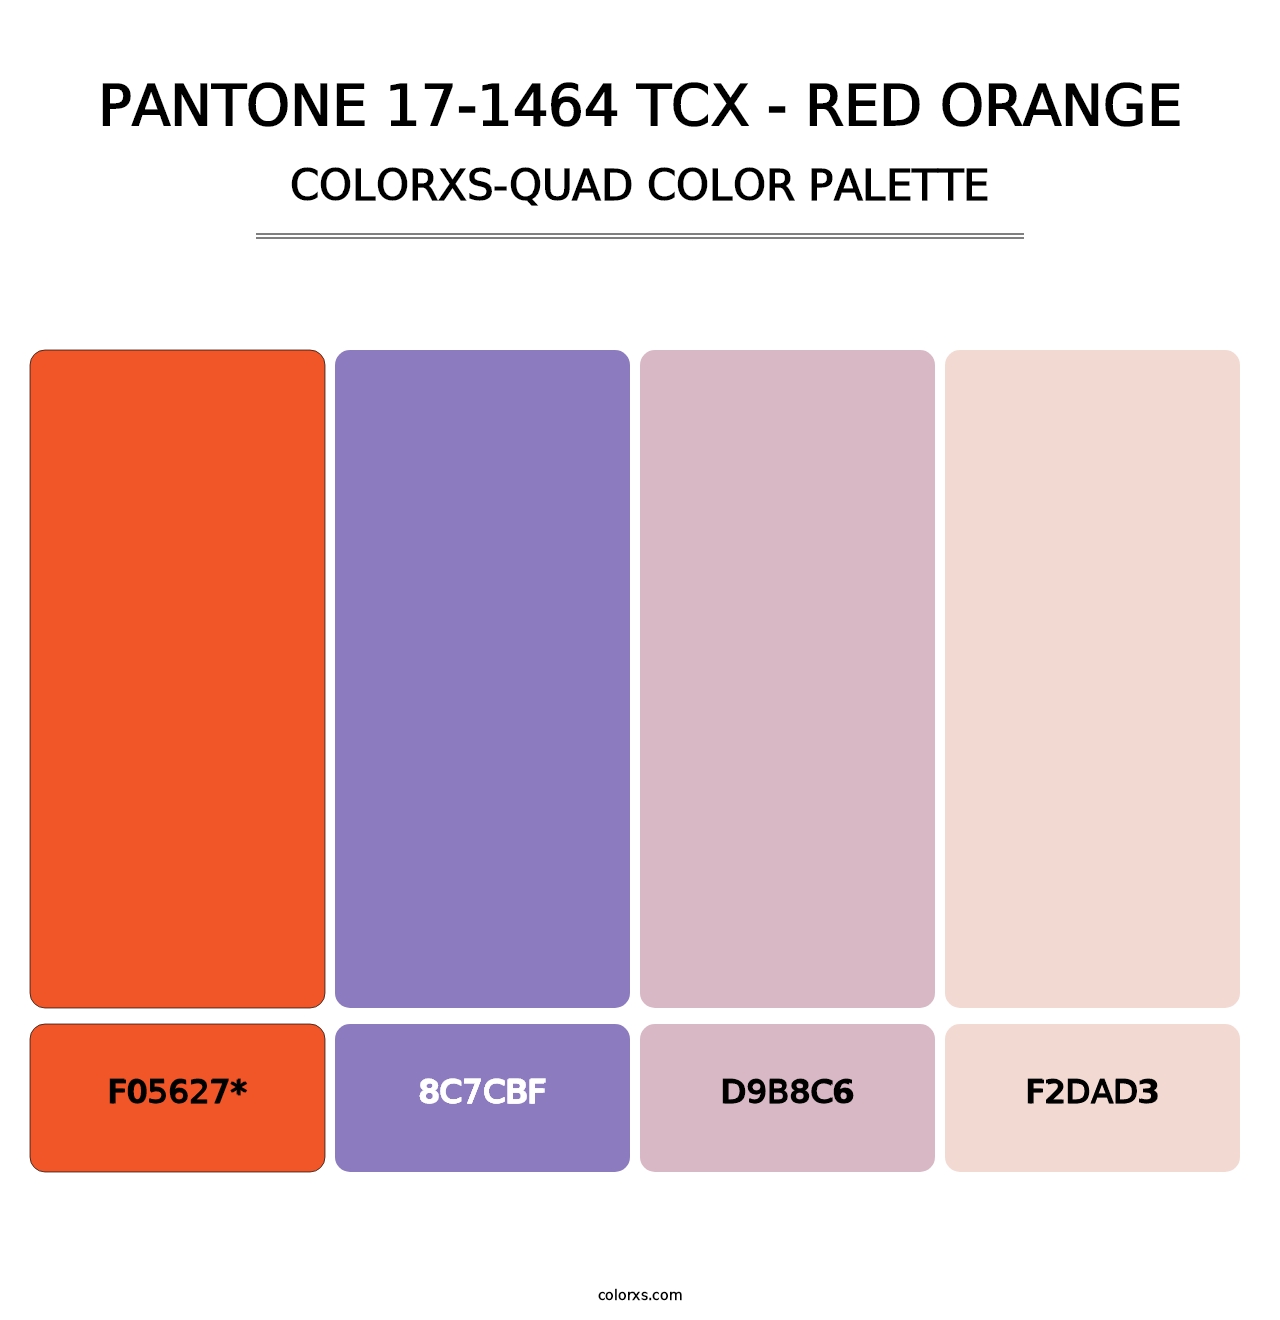 PANTONE 17-1464 TCX - Red Orange - Colorxs Quad Palette